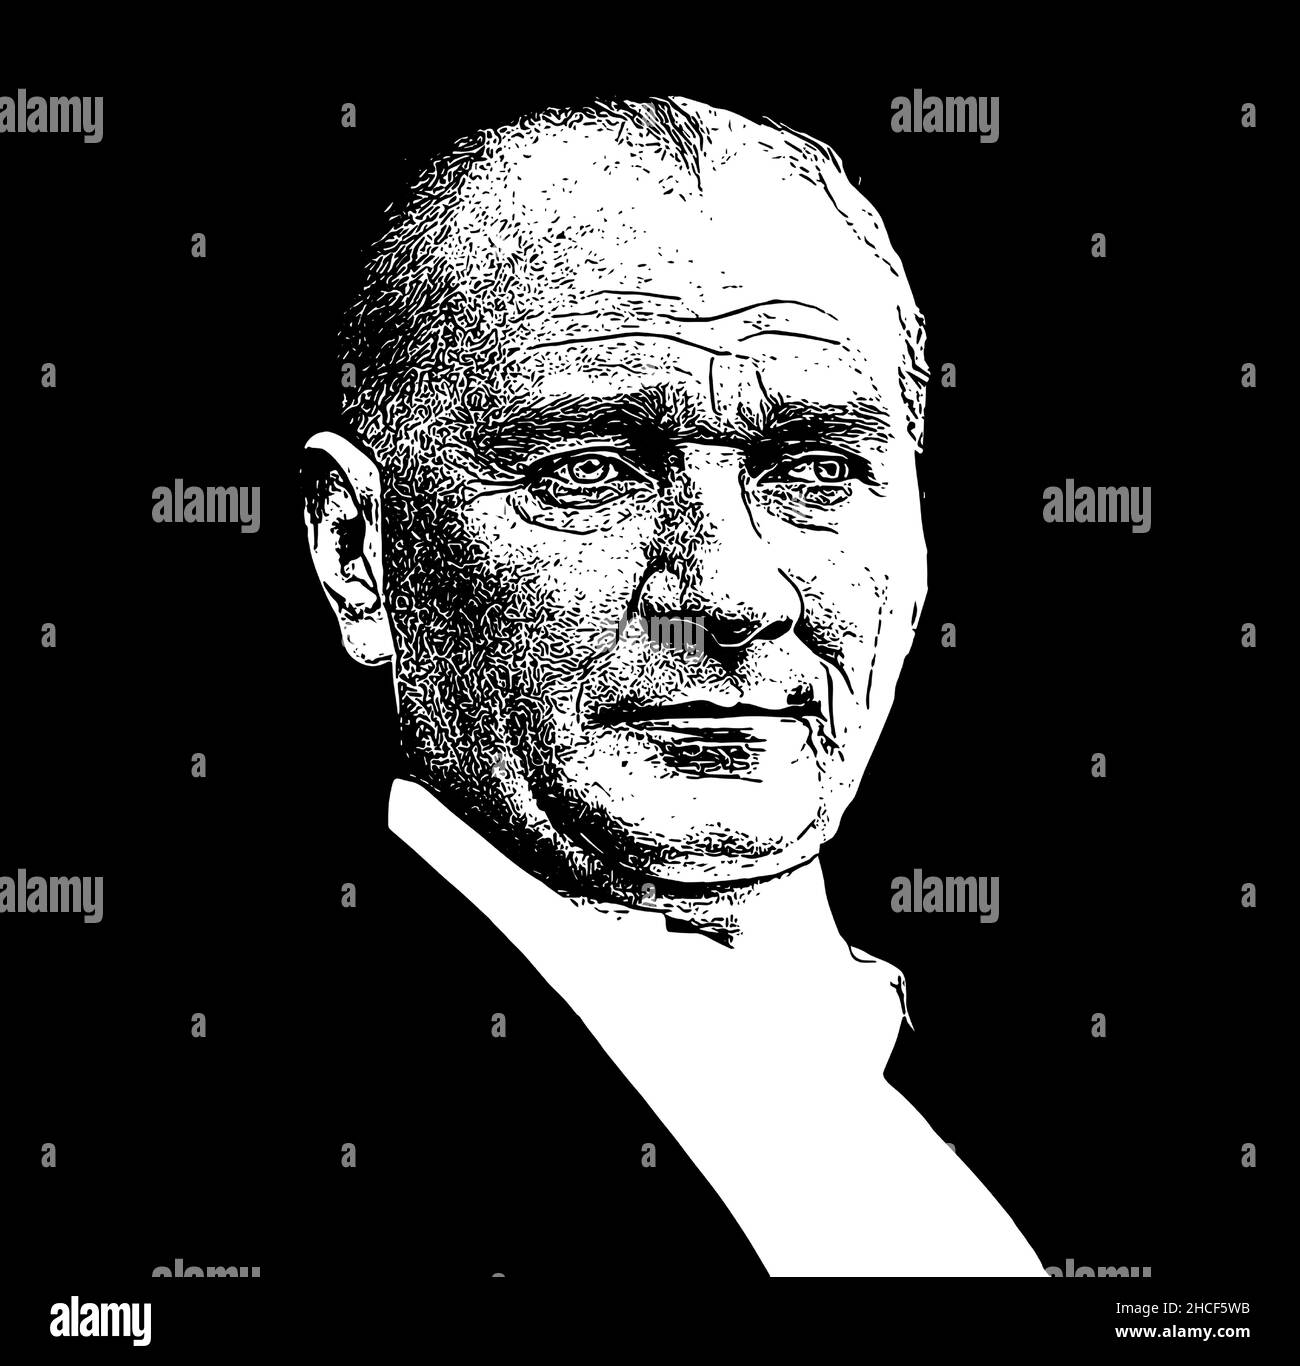 Mustafa Kemal Ataturk illustration. He is the founder of modern Republic of Turkey. Stock Vector